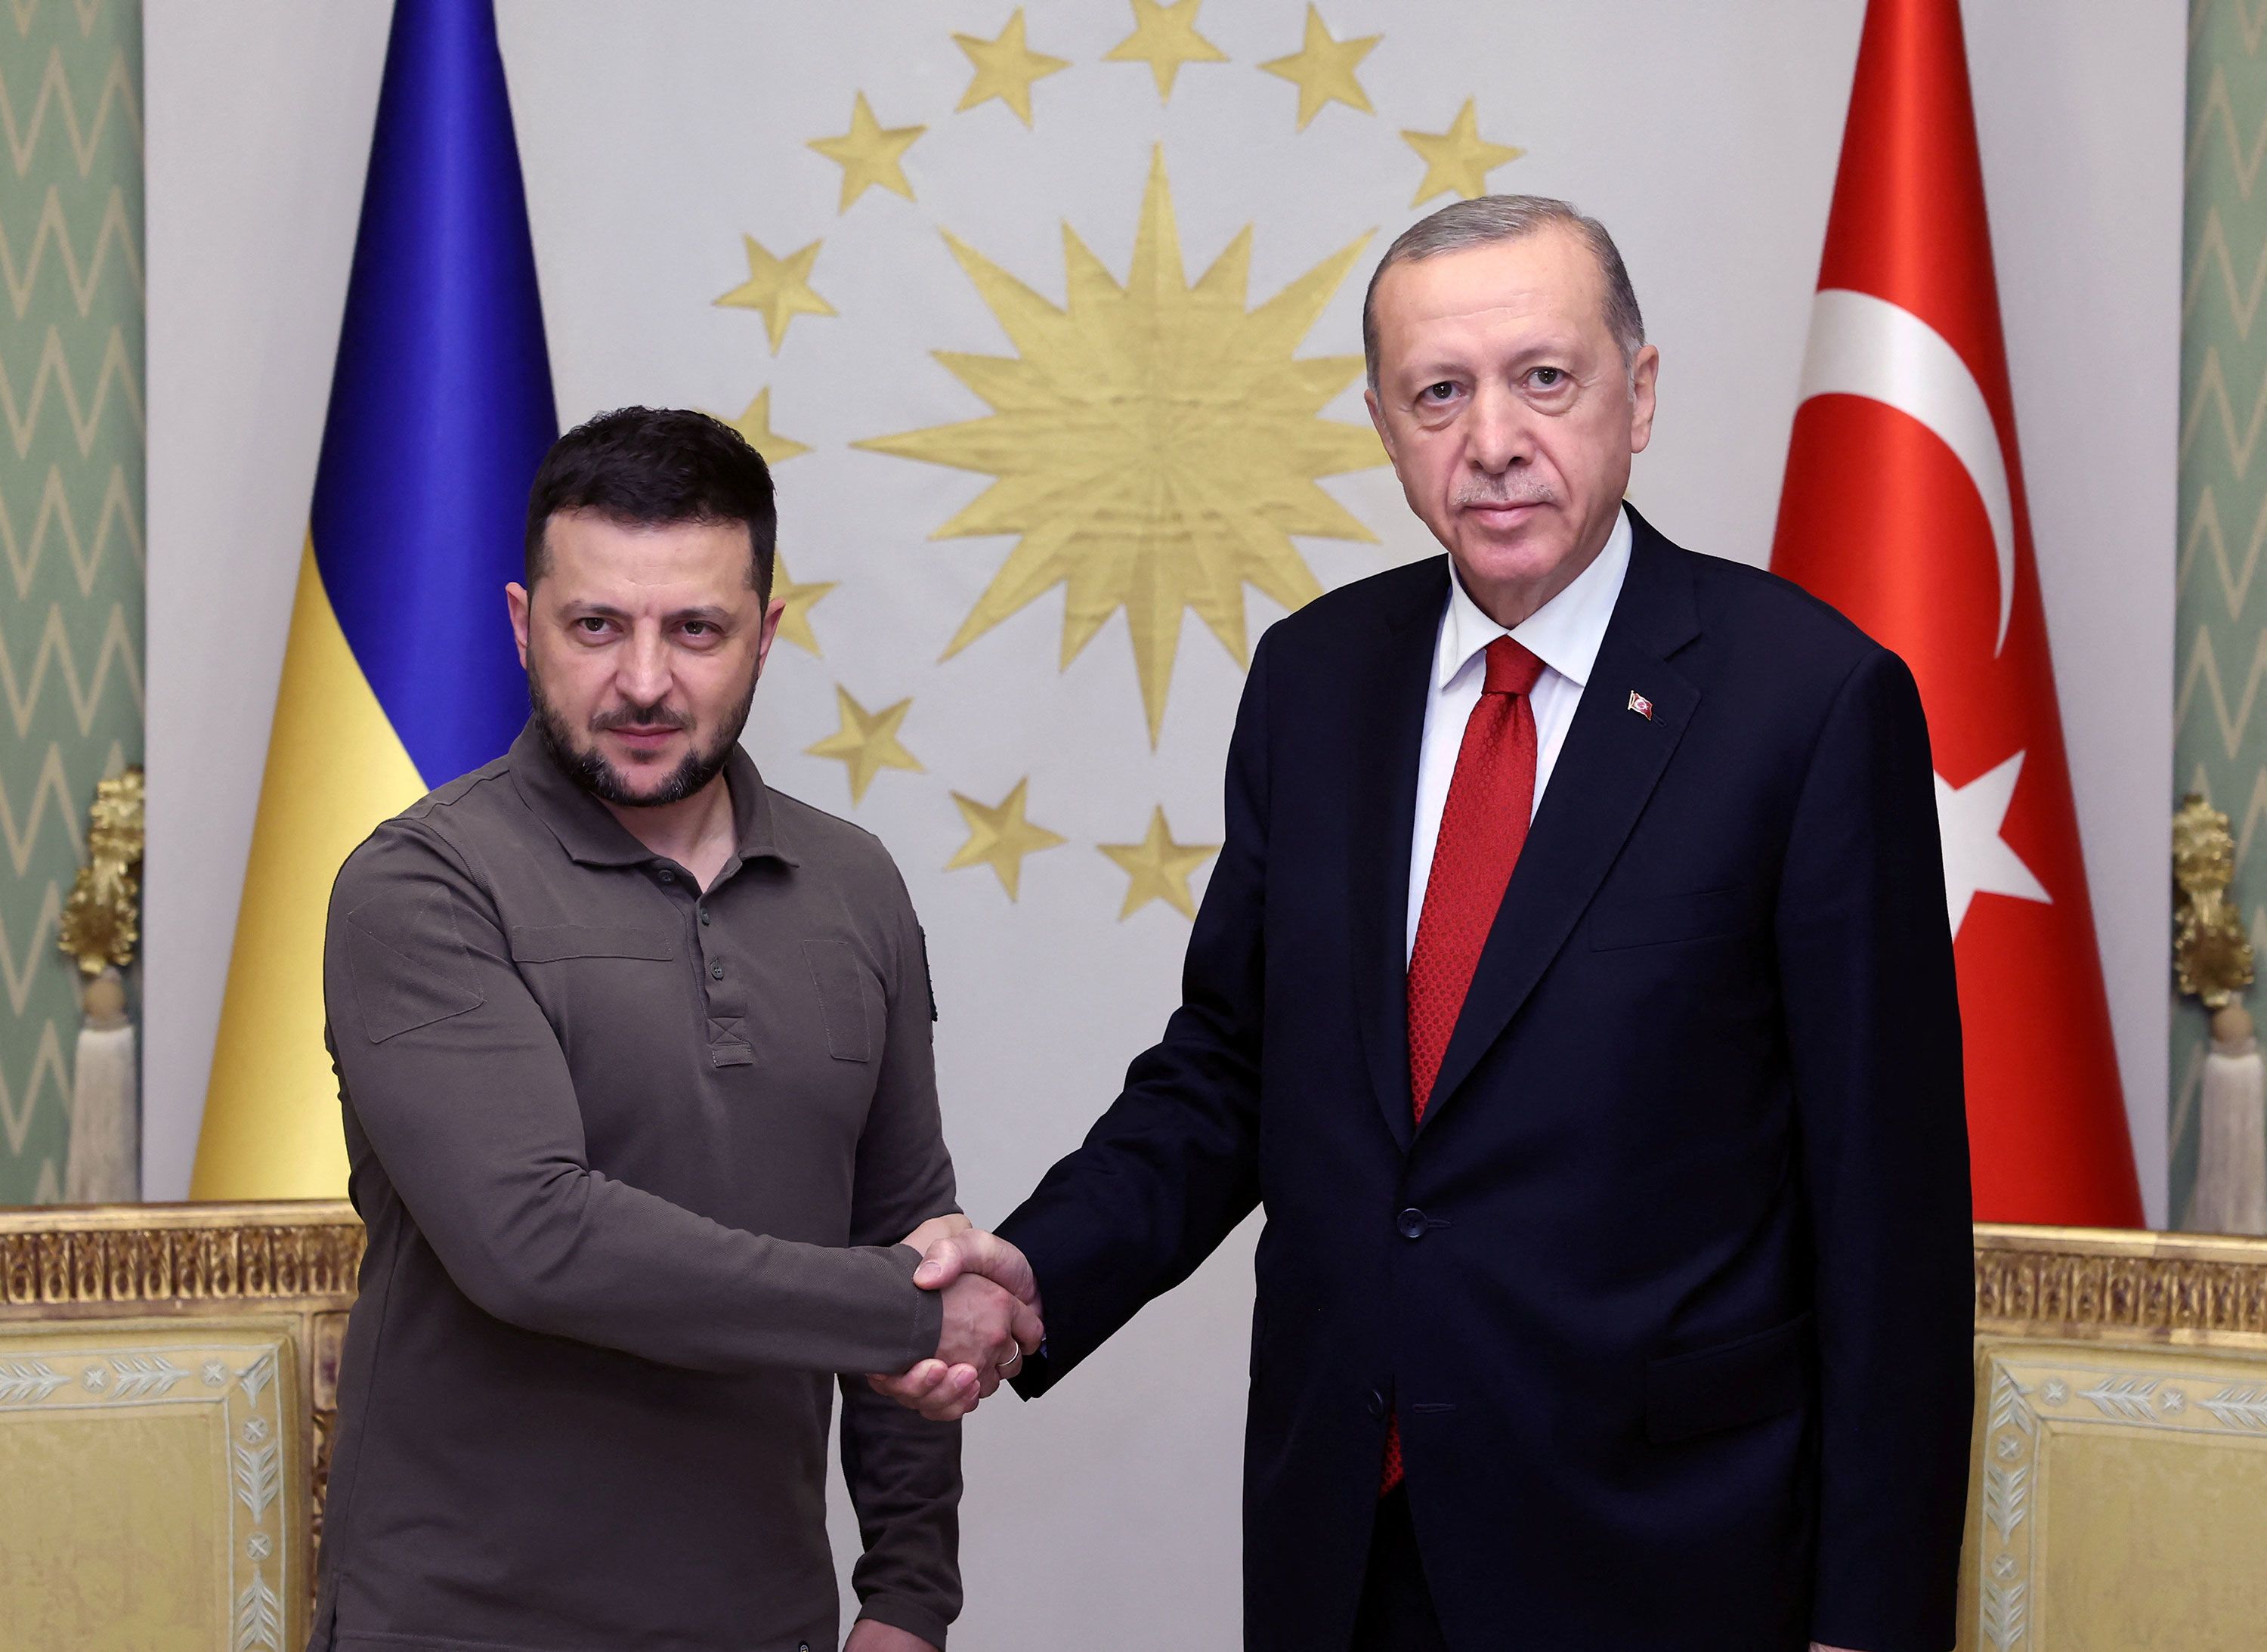 Turkey's Erdogan says Ukraine deserves NATO membership | CNN